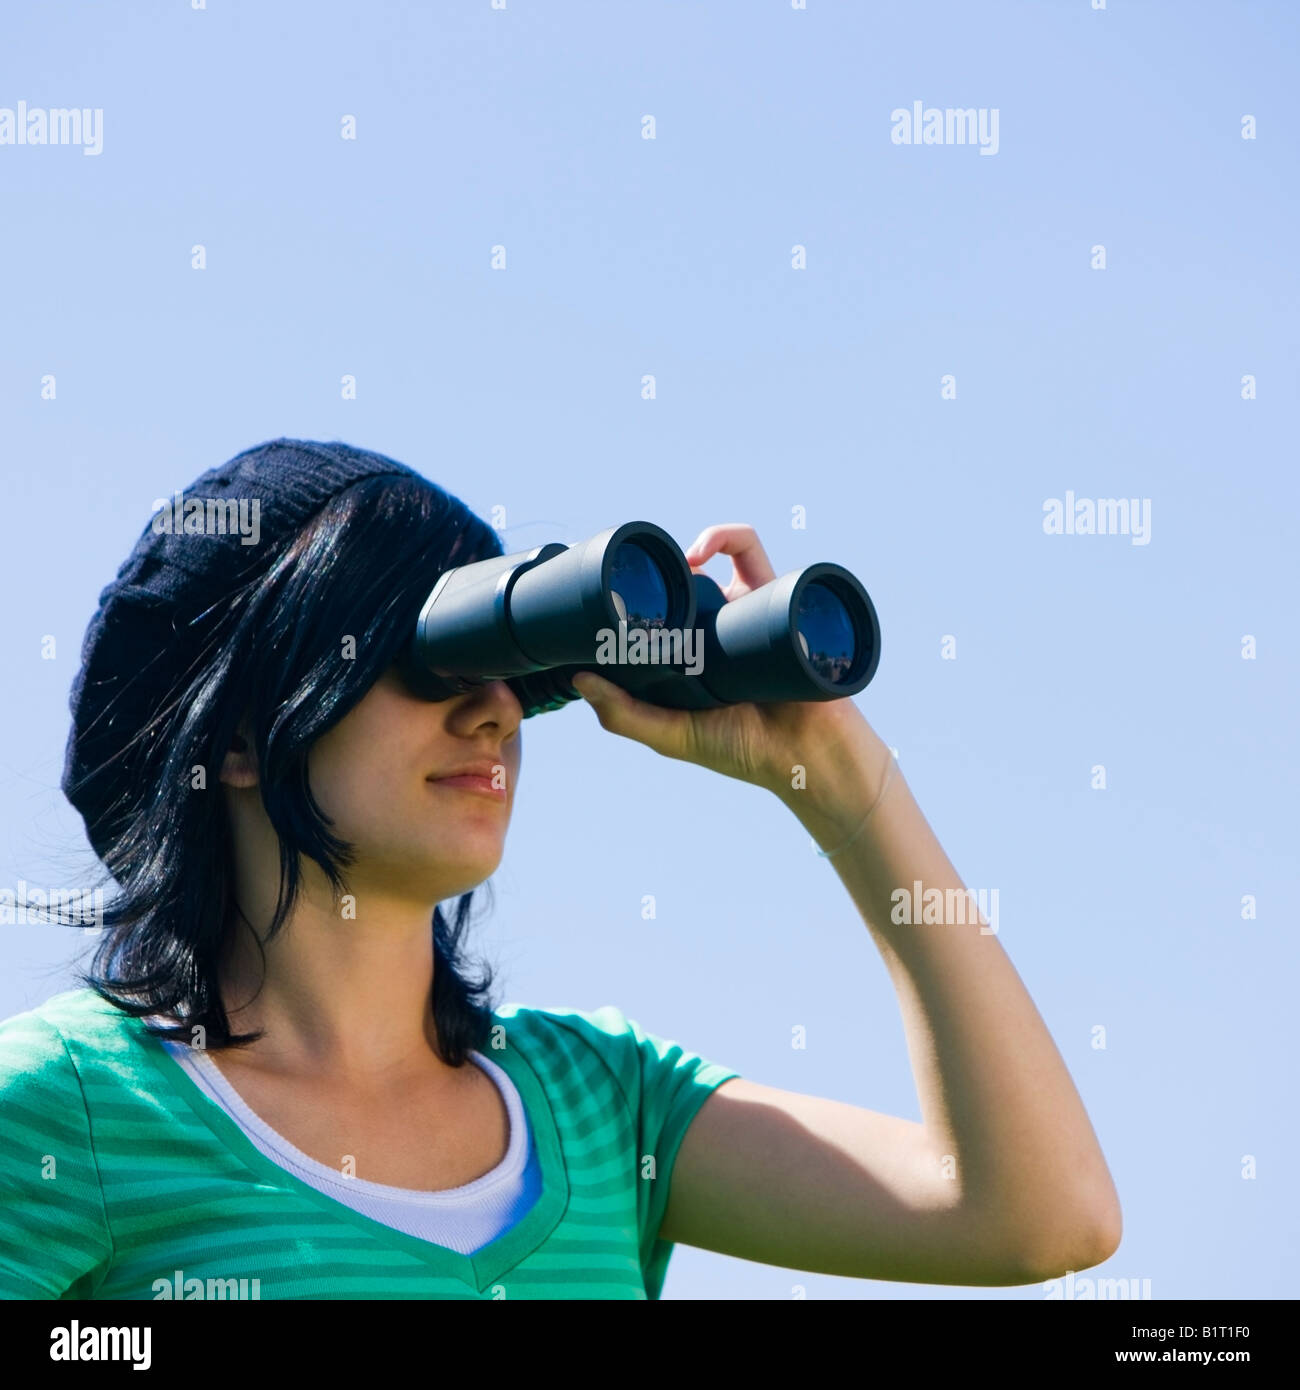 A teenager looks through binoculars Stock Photo